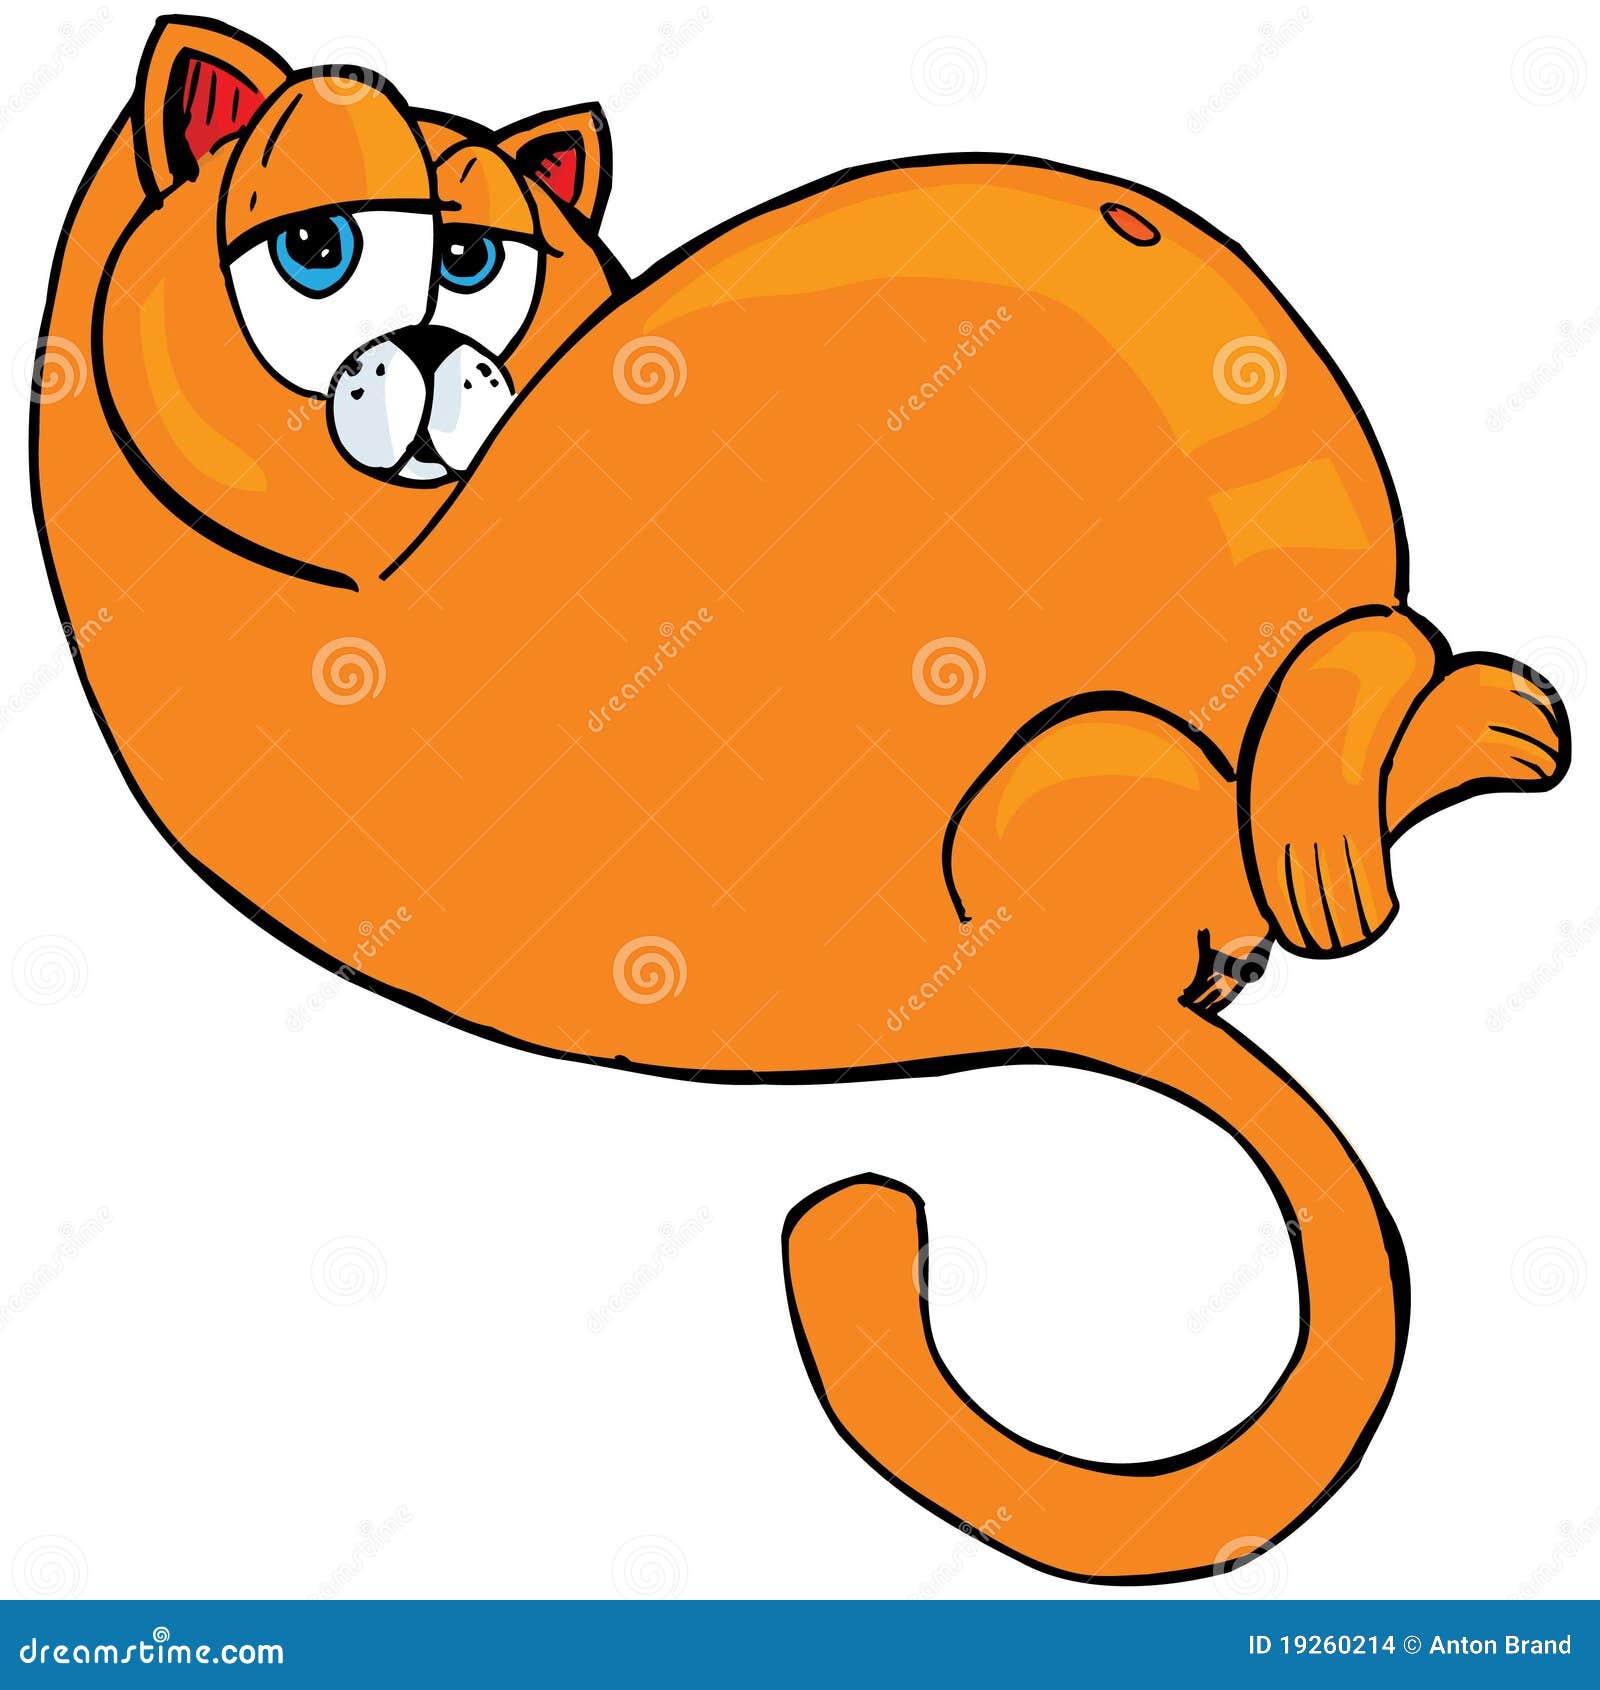  Cartoon  of fat  orange cat  stock vector Illustration of 